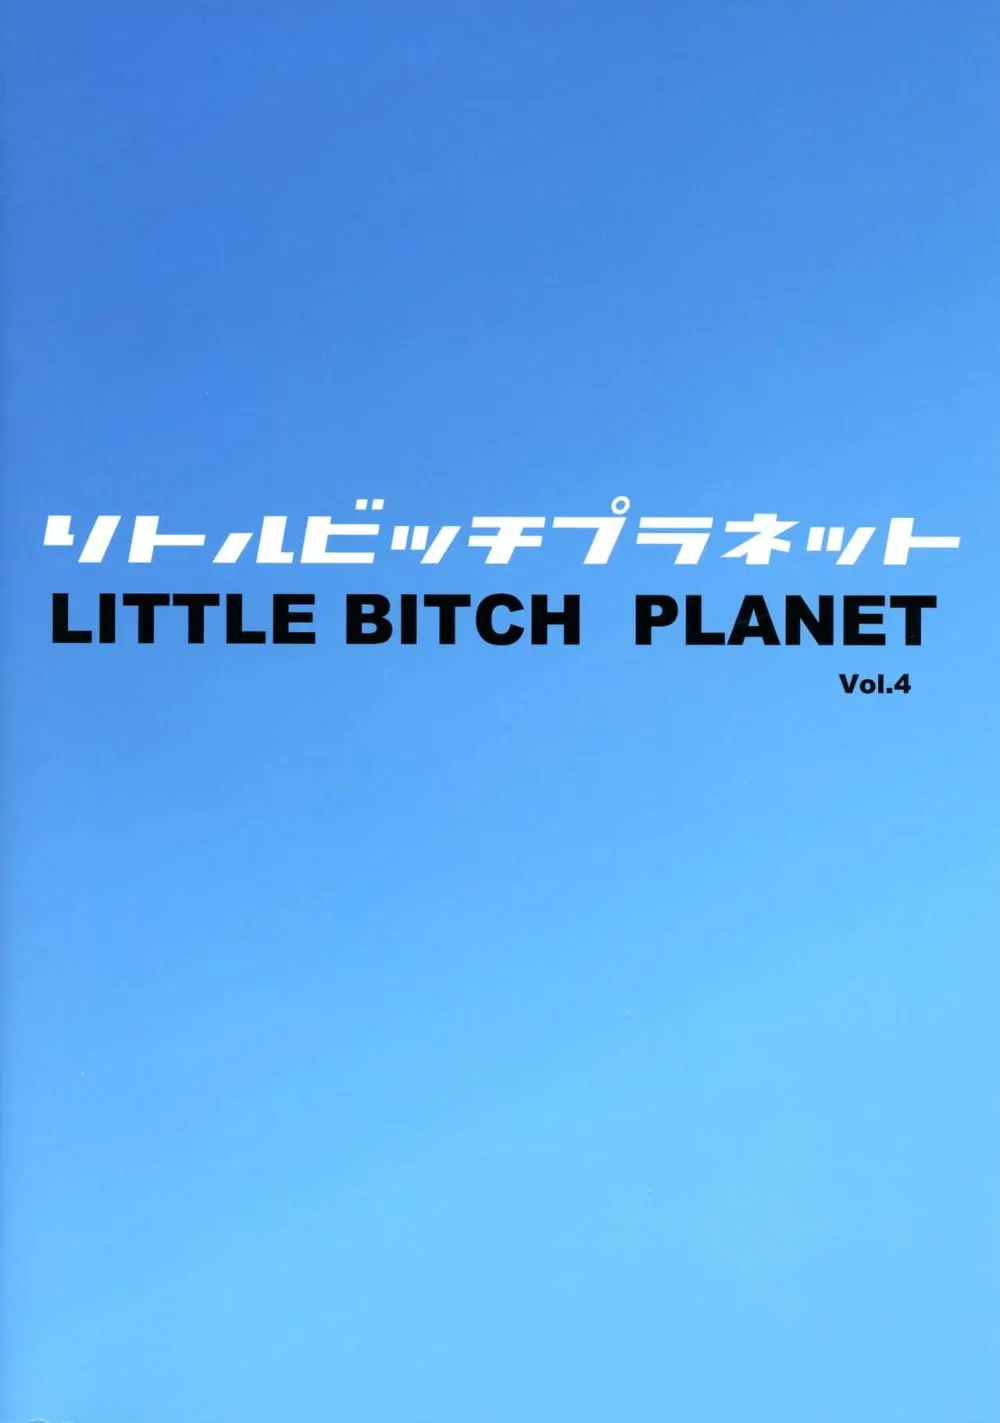 Little bitch planet 2